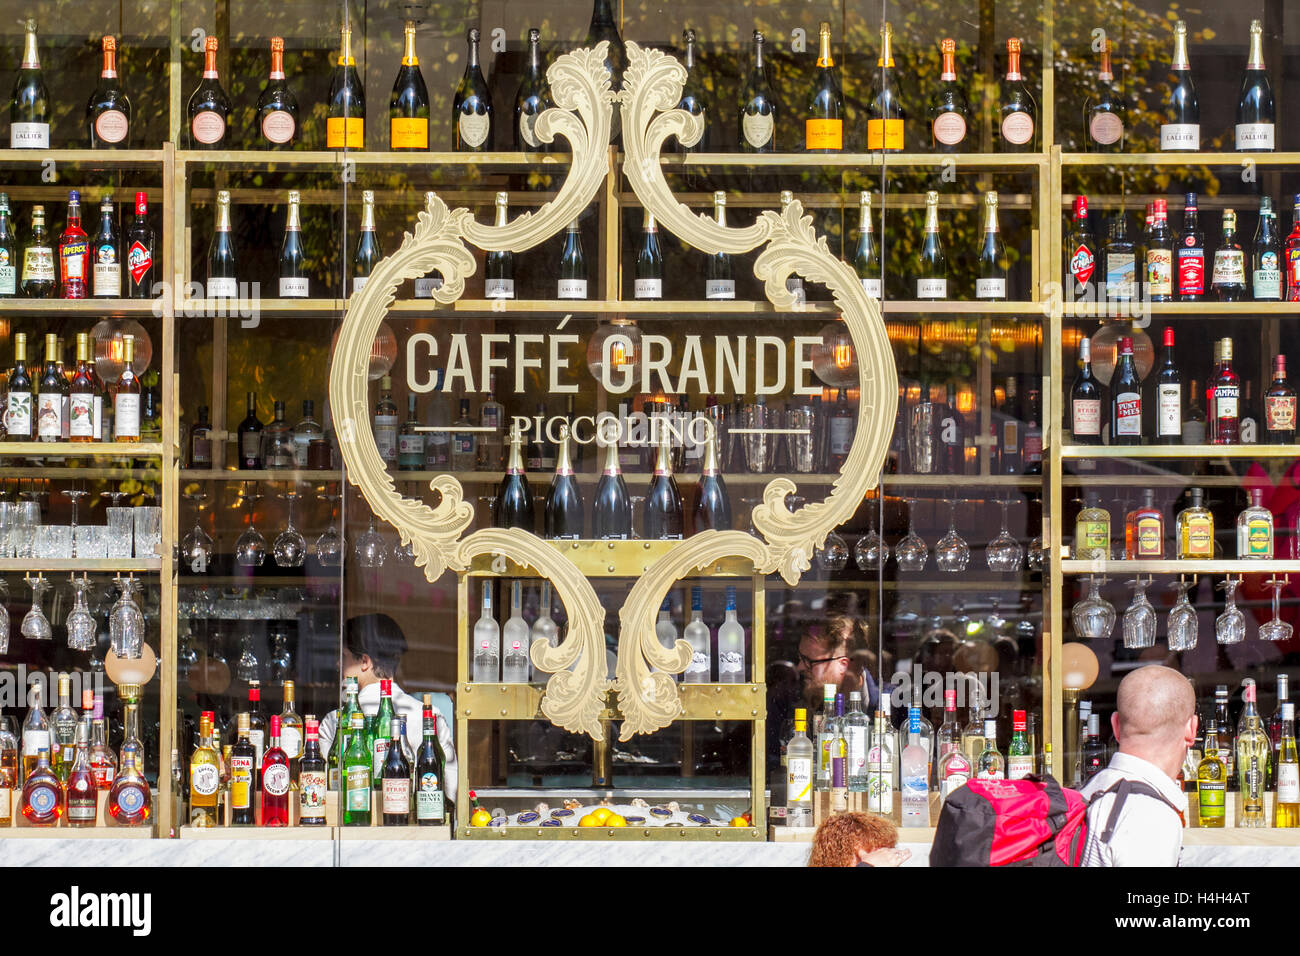 Caffé Grande Piccolino, wines & liquers retail business in Albert square, Manchester, UK. Stock Photo